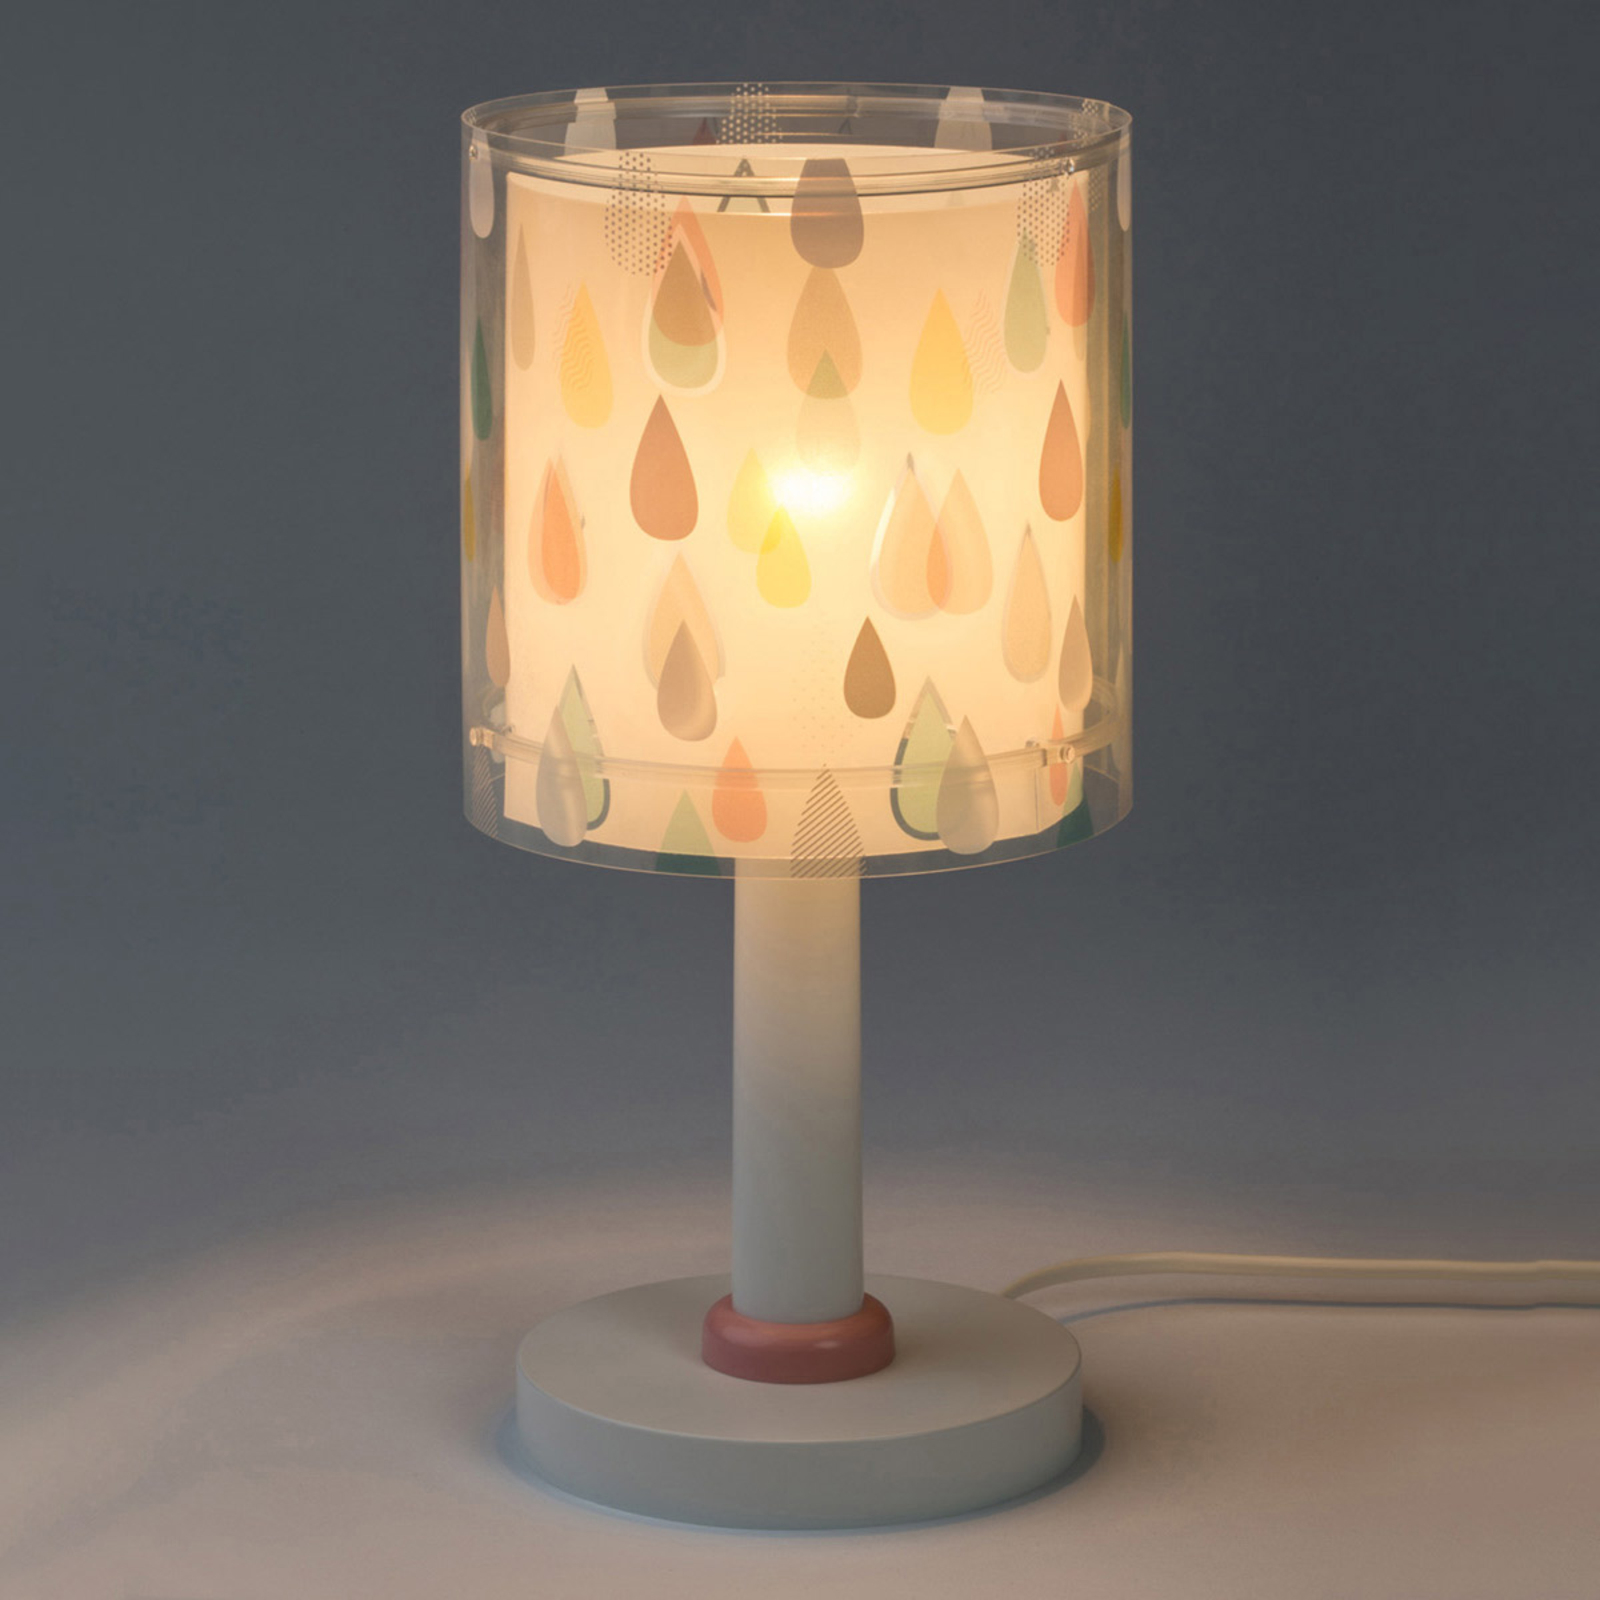 Dalber Colour Rain stolna svjetiljka s duplim sjenilom